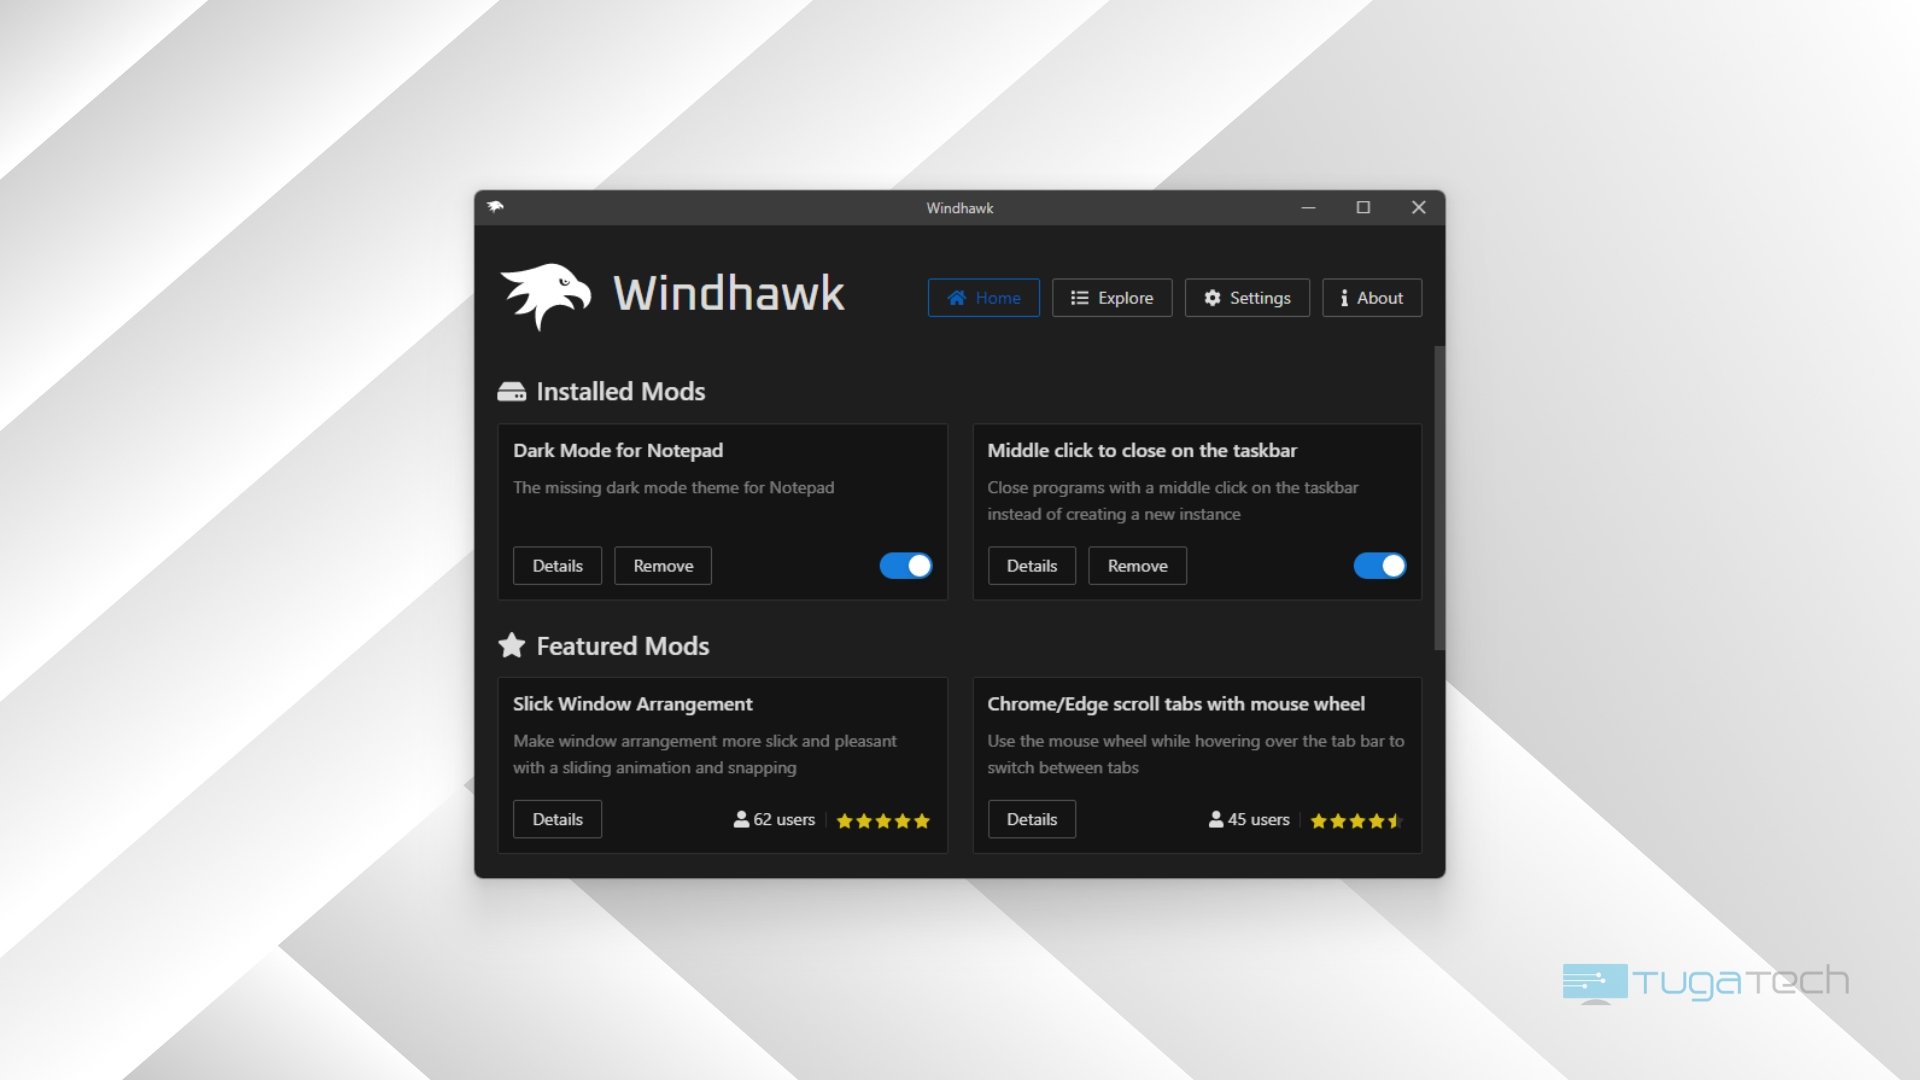 Windhawk